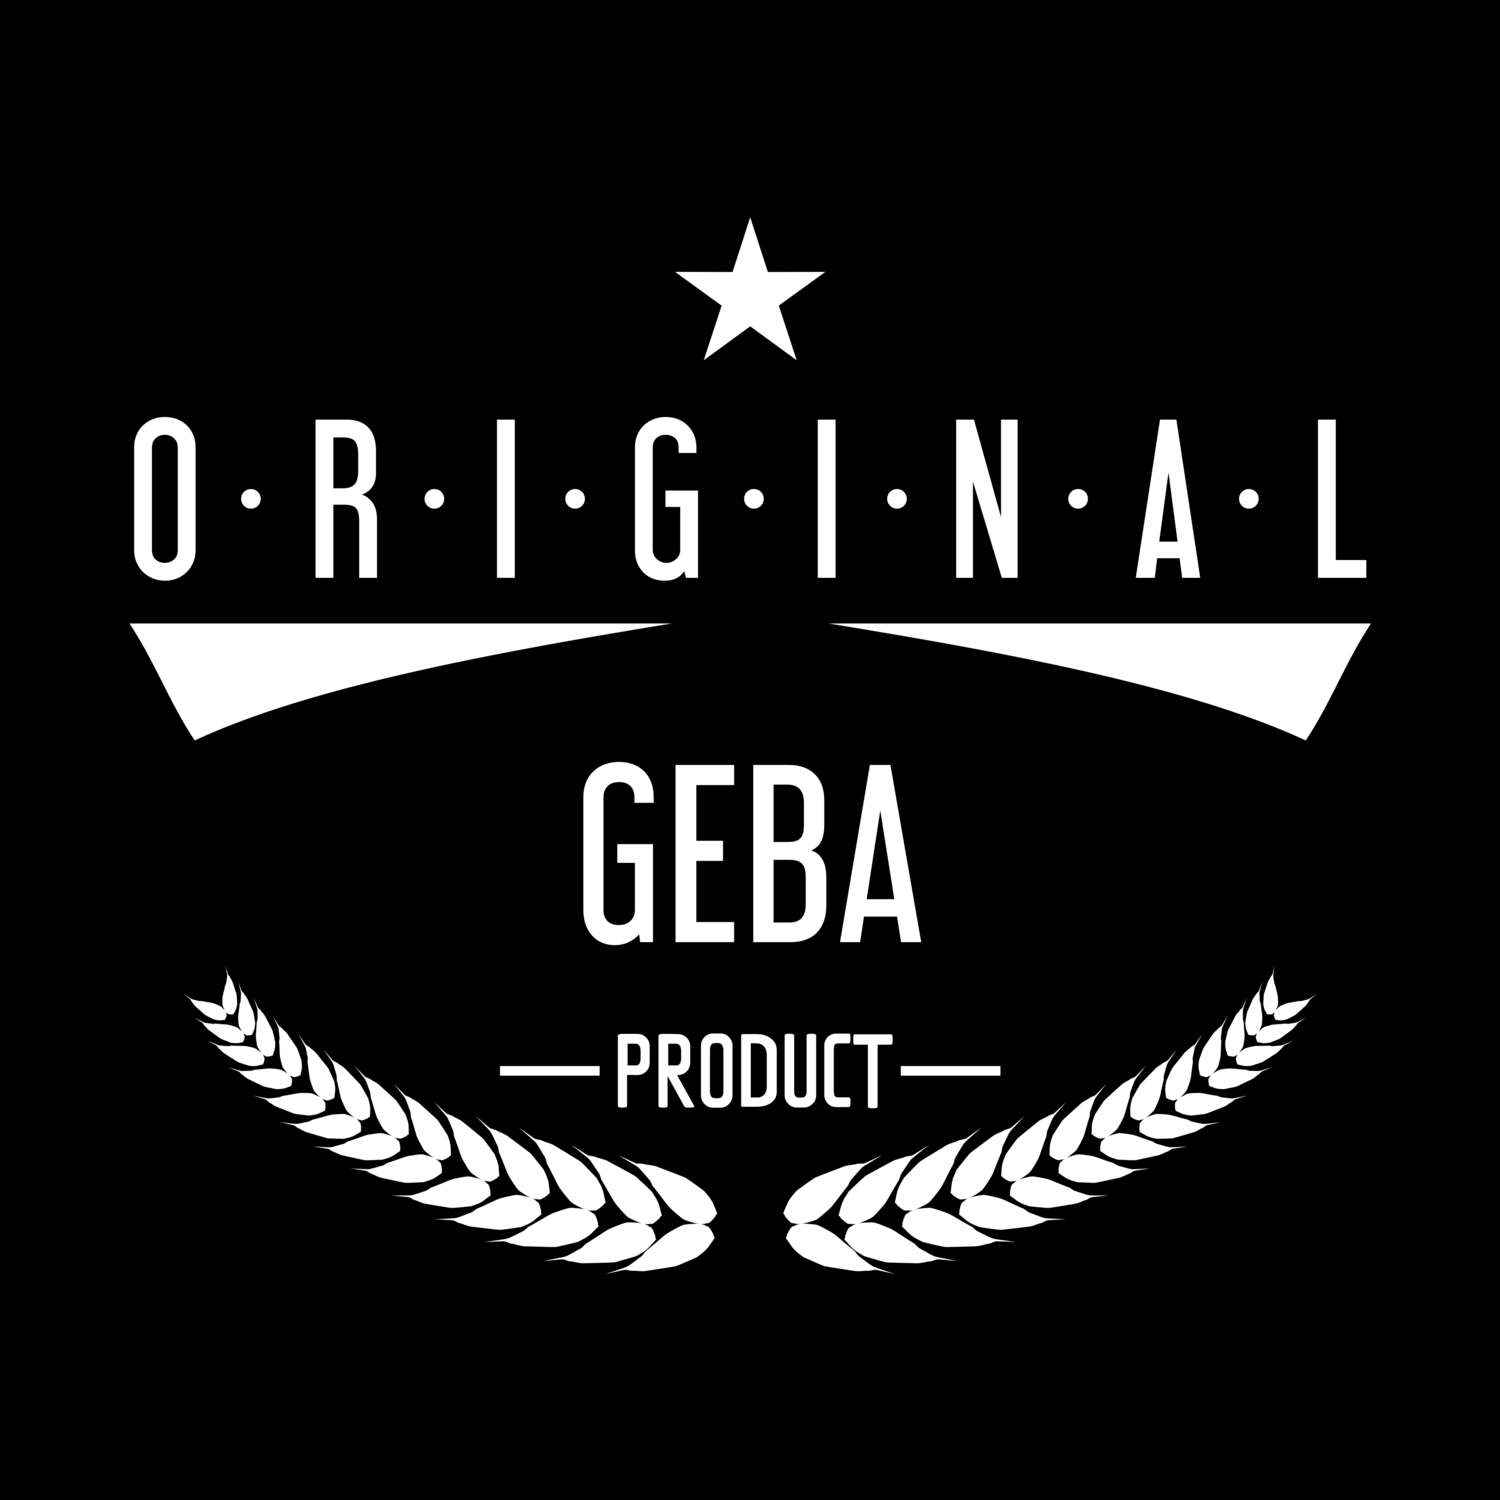 Geba T-Shirt »Original Product«